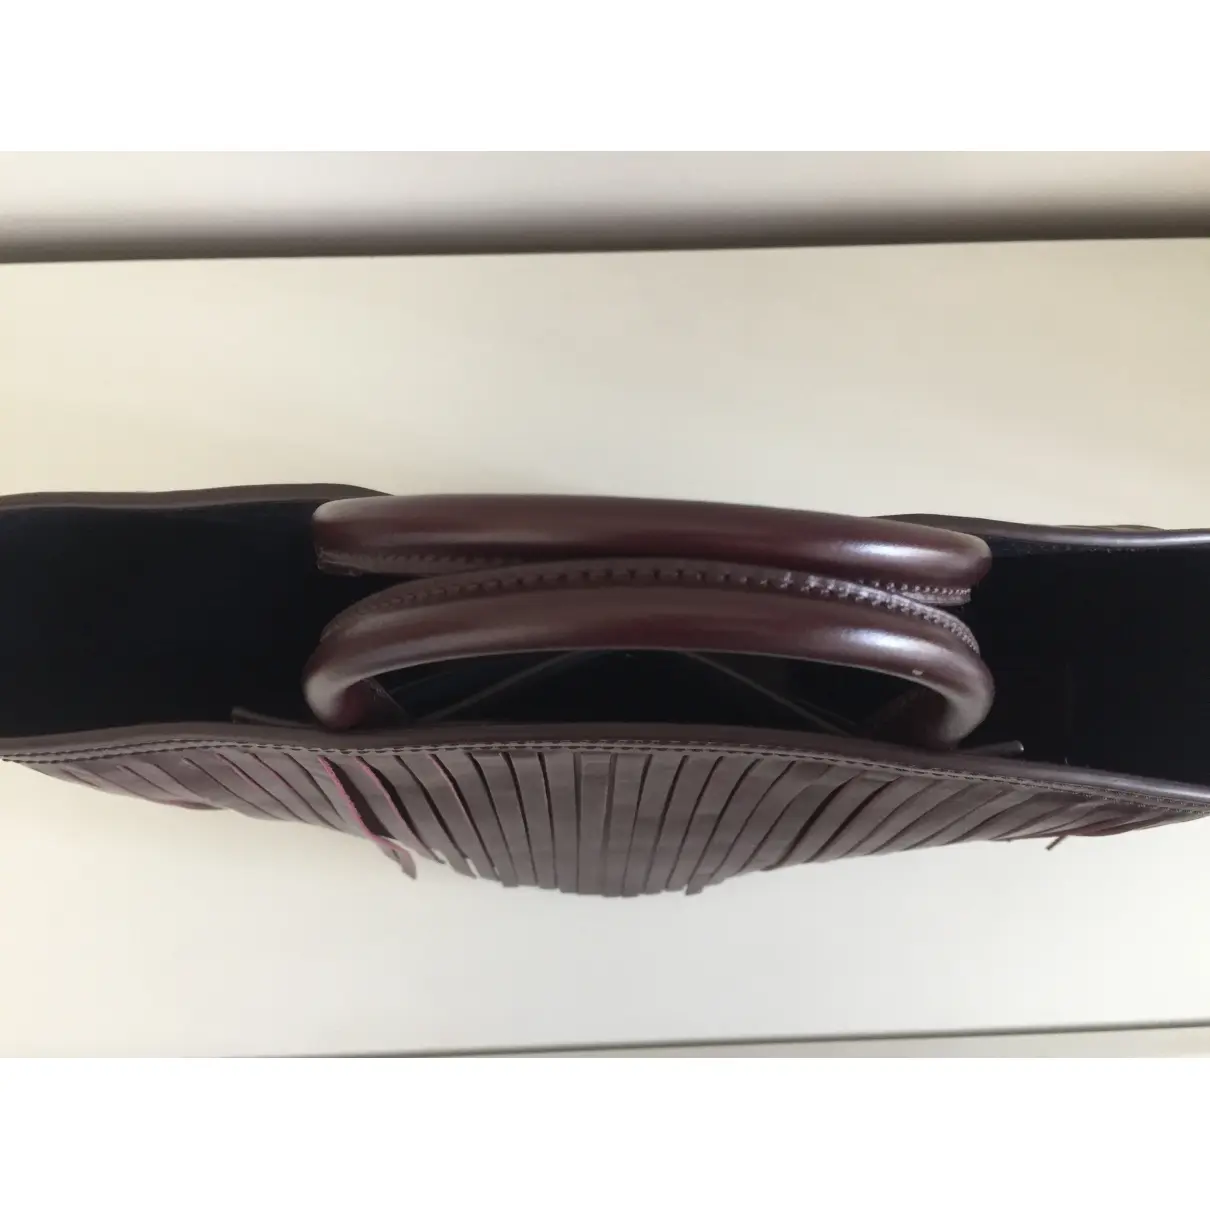 Leather handbag Trademark